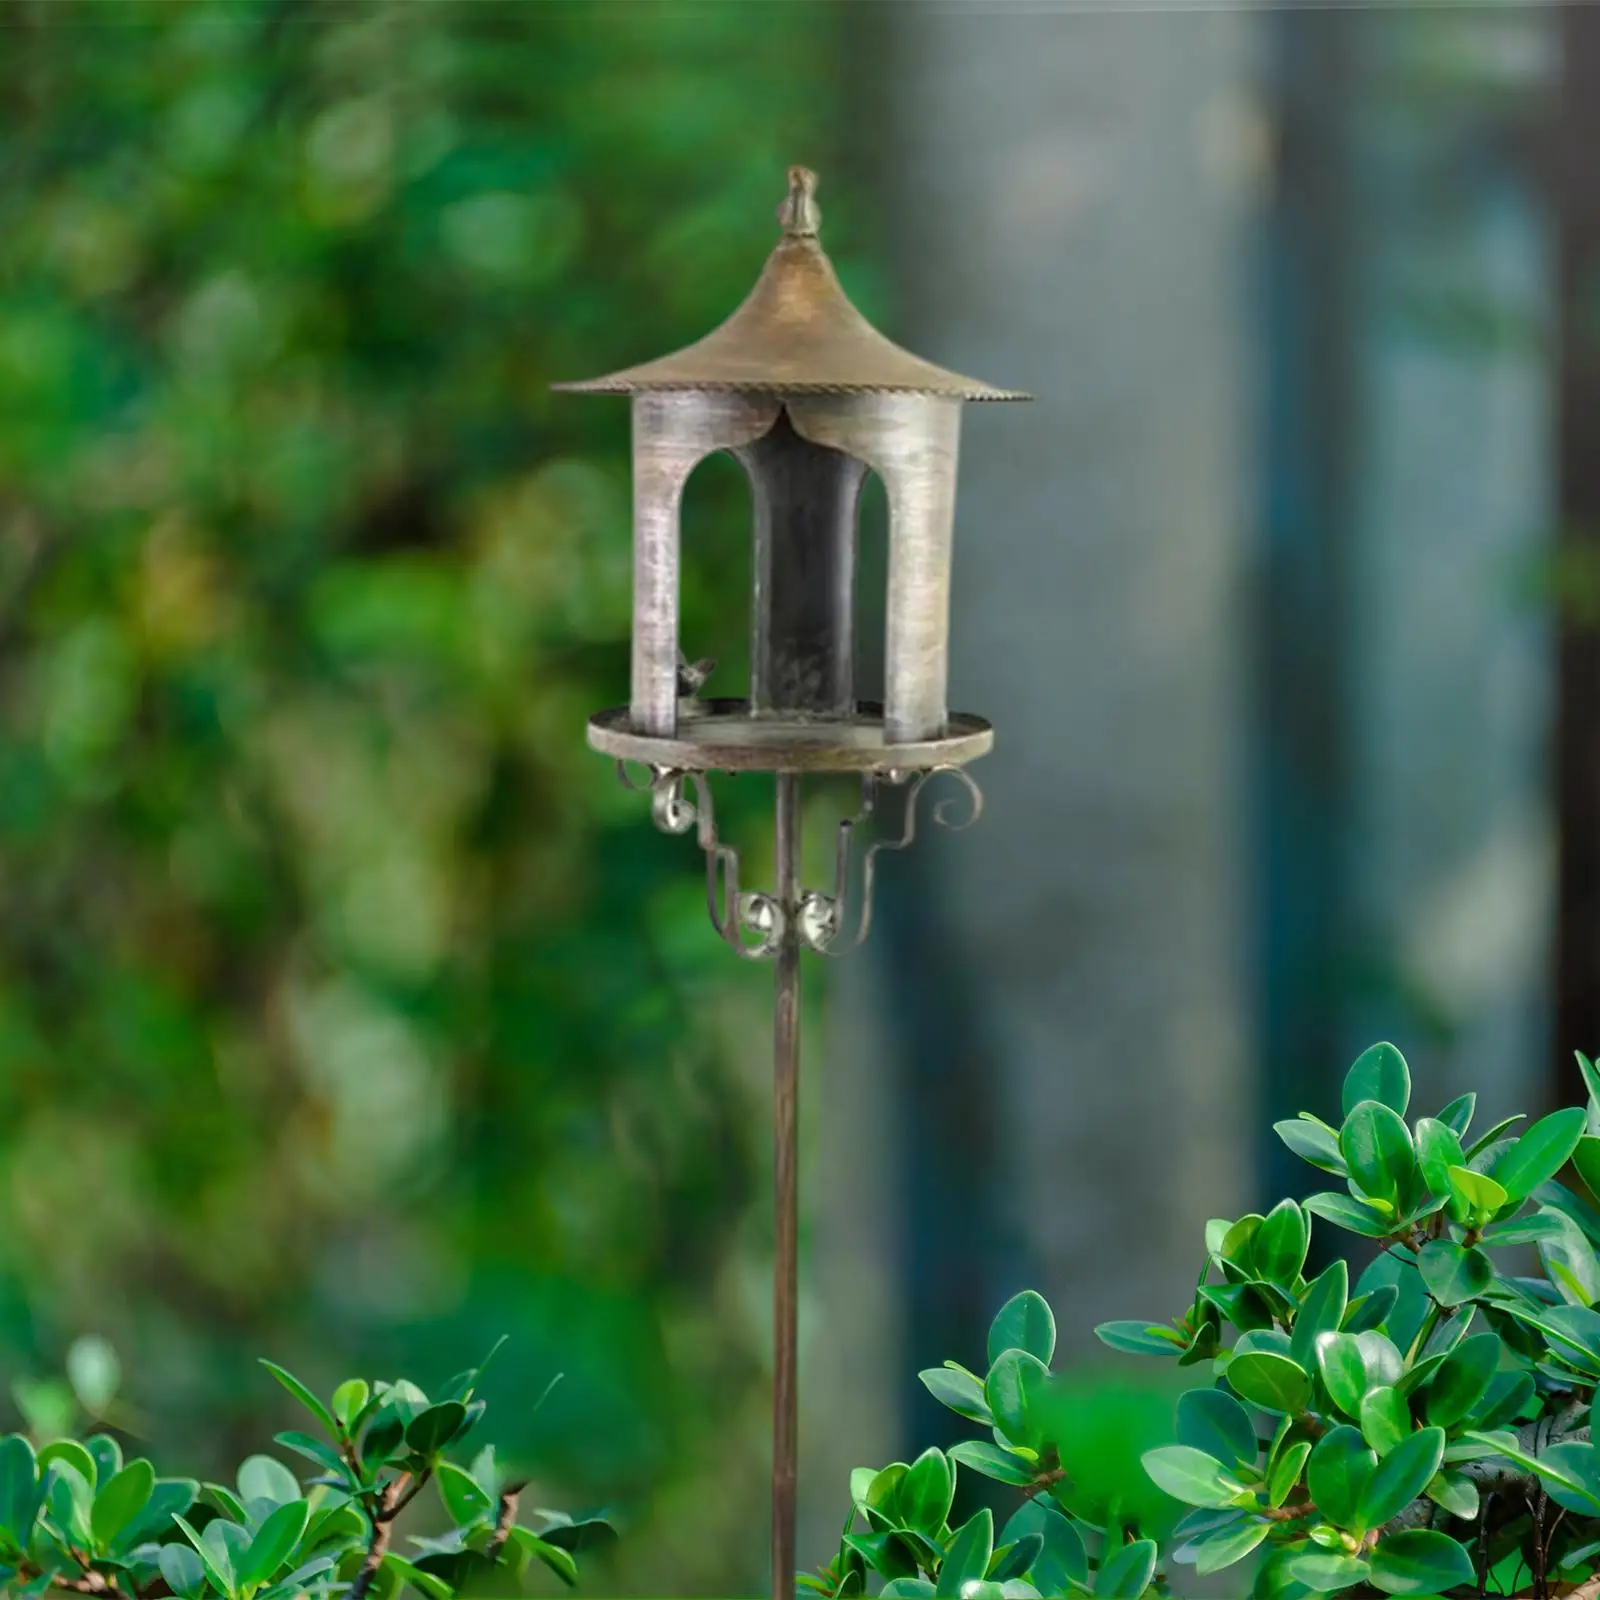 Rainproof Standing Bird Feeder Feeding Outdoor Pole Bird Feeding Station for Outdoor